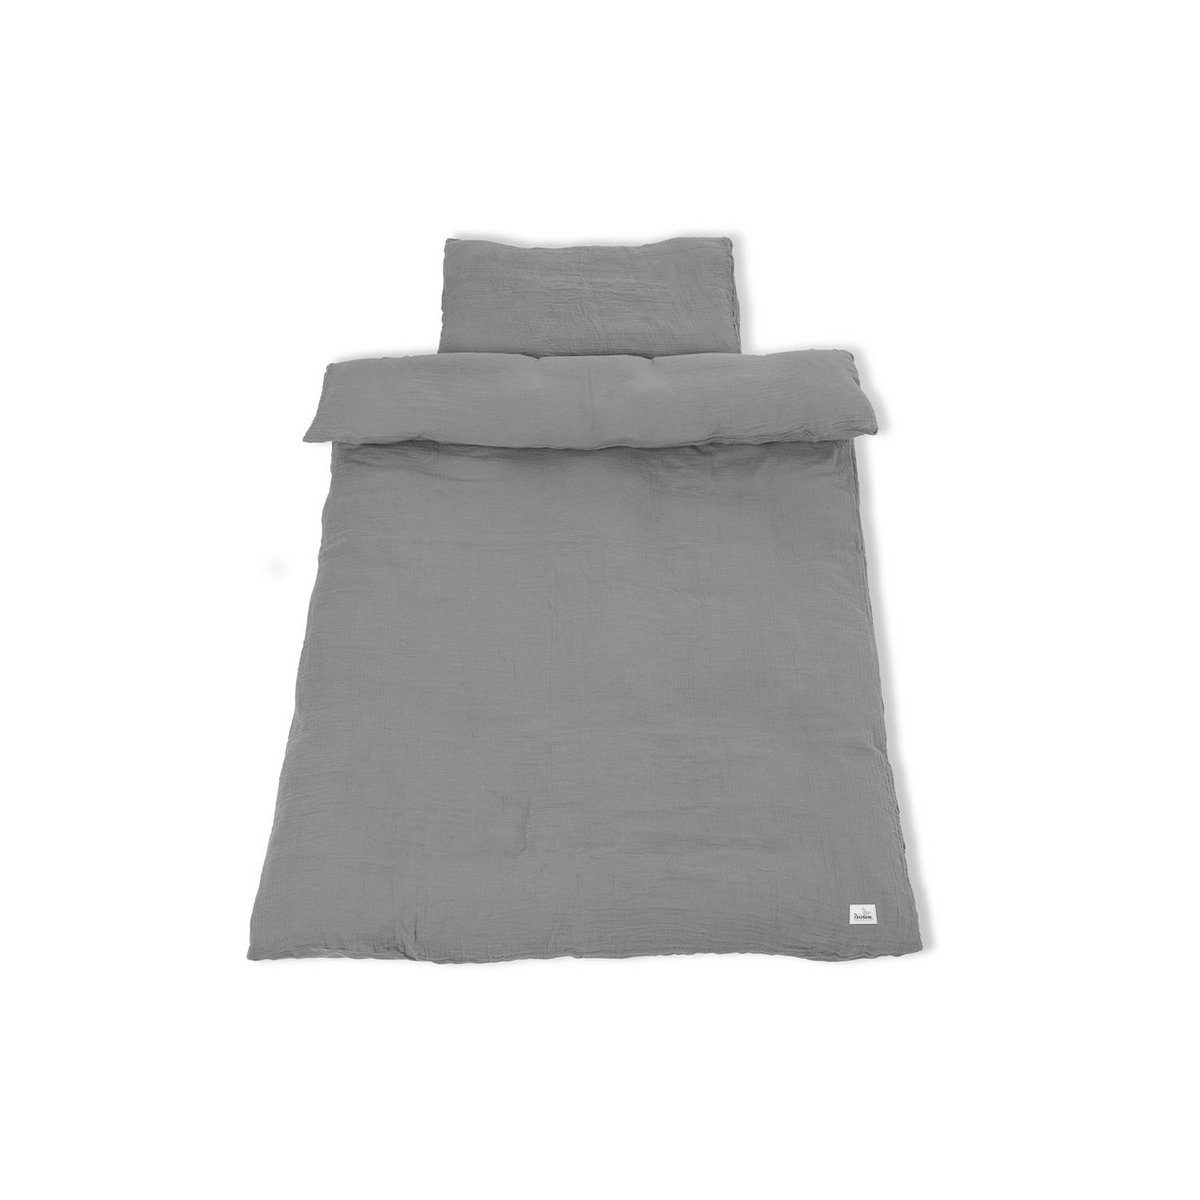 Muslin duvet cover set for children's beds grey 2 pcs